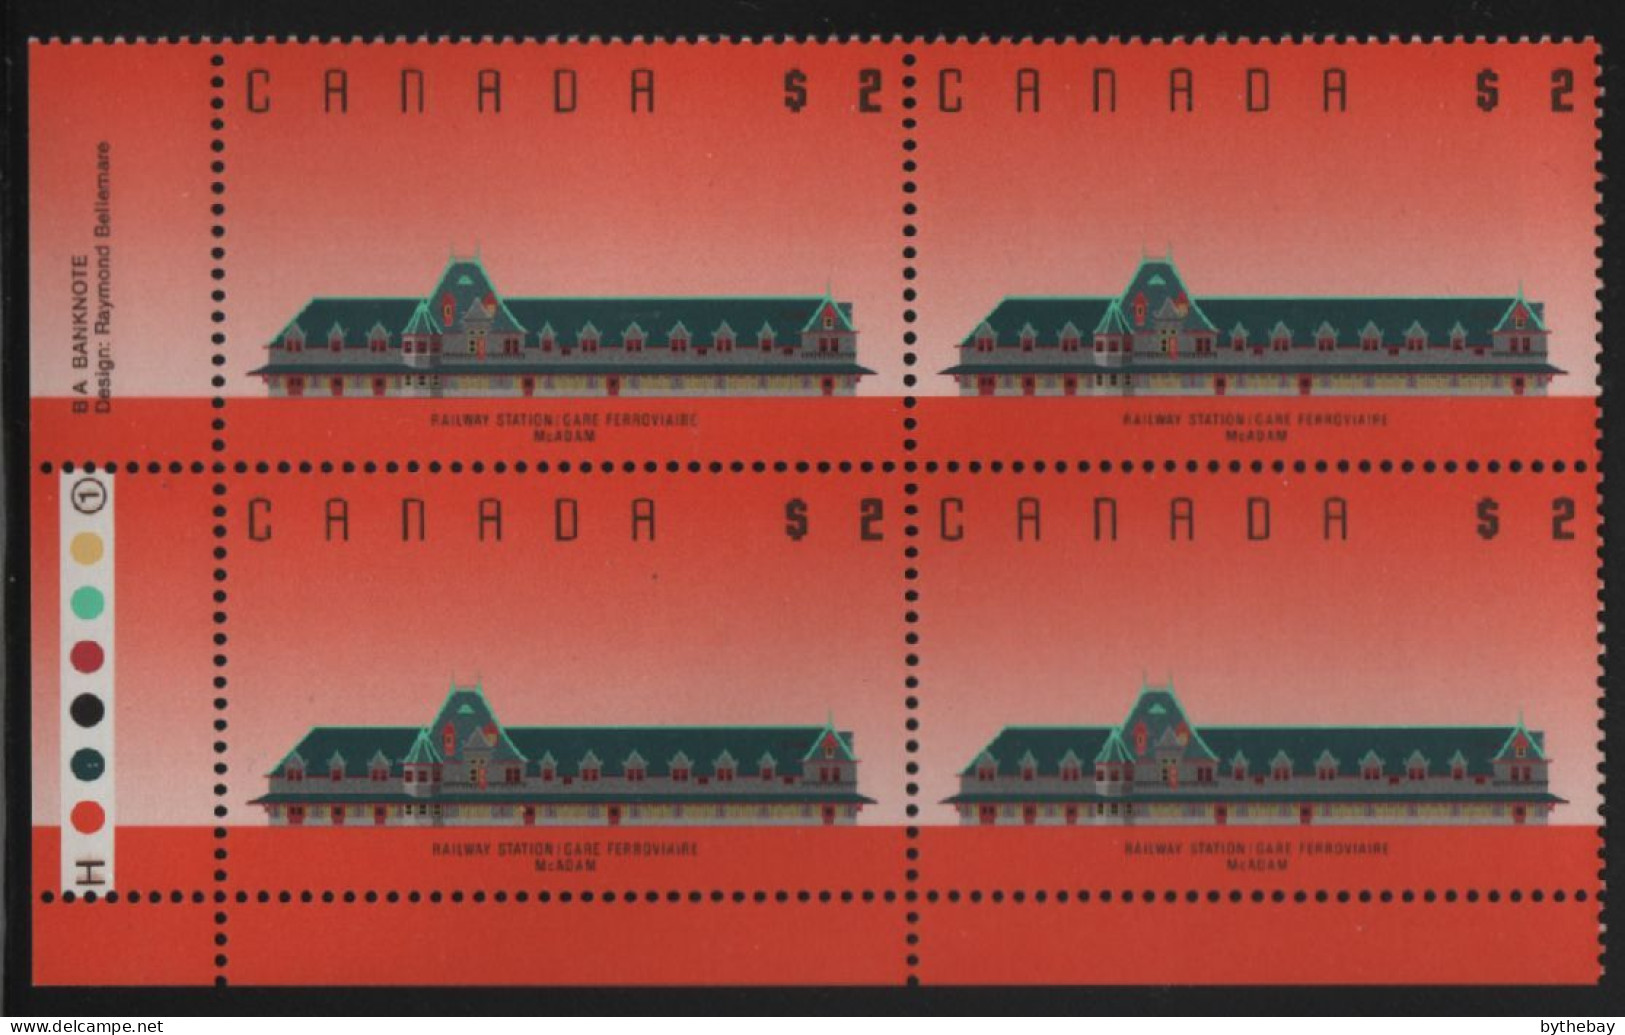 Canada 1988-92 MNH Sc 1182 $2 McAdam Railway Station LL Plate Block - Plate Number & Inscriptions